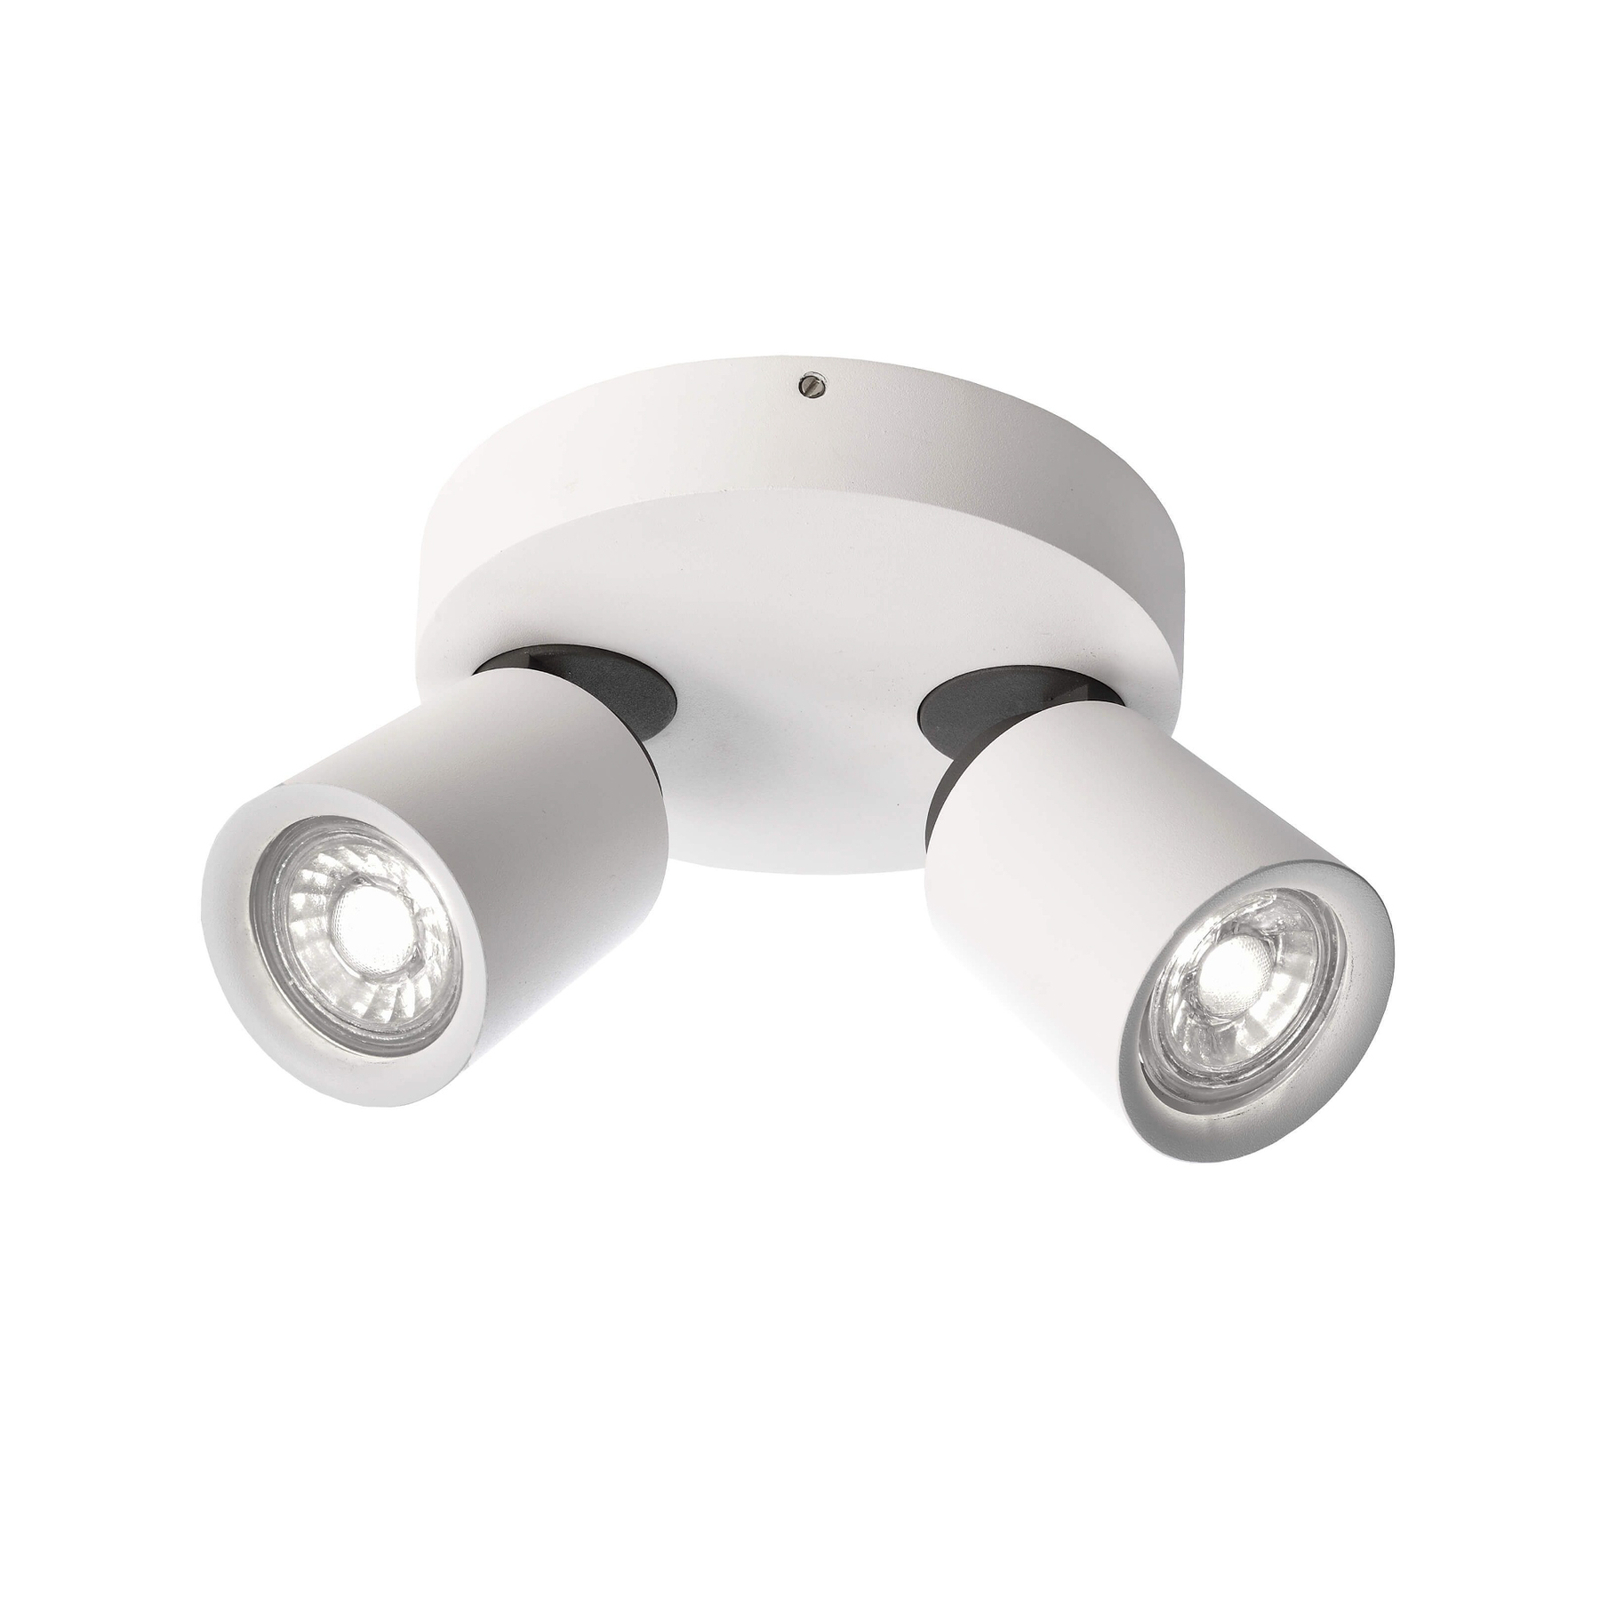 Librae Round II ceiling light, 2-bulb white